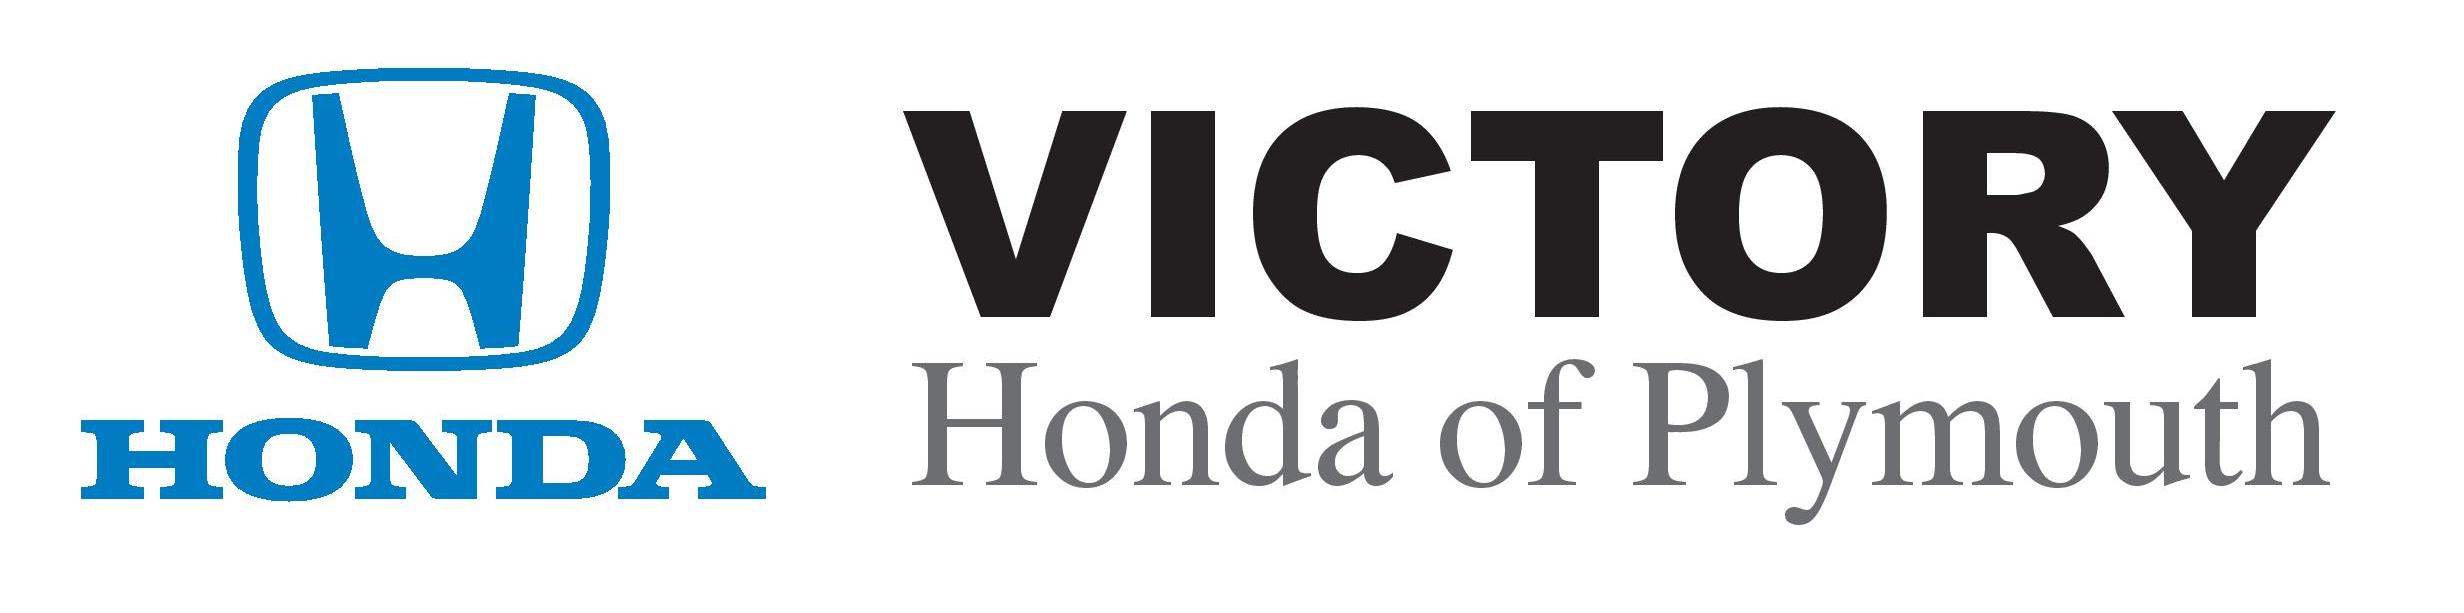 Victory Plymouth Honda